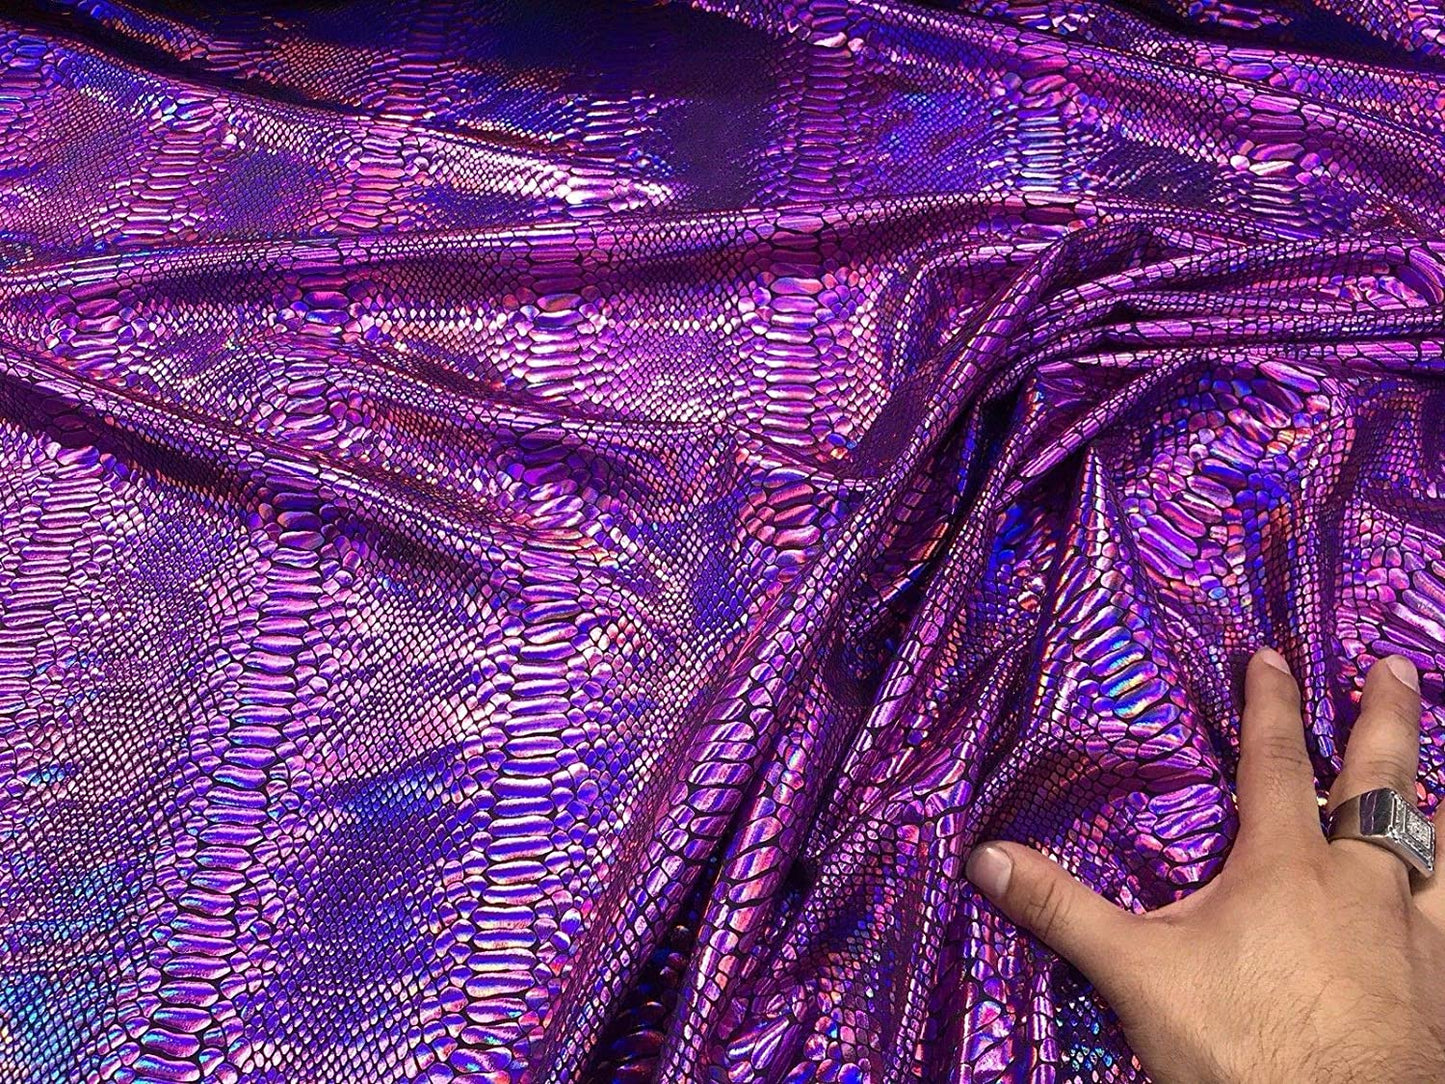 Iridescent Snake Skin Print On A Nylon 2 Way Stretch Spandex Fabric BY The Yard. (Purple on Black)